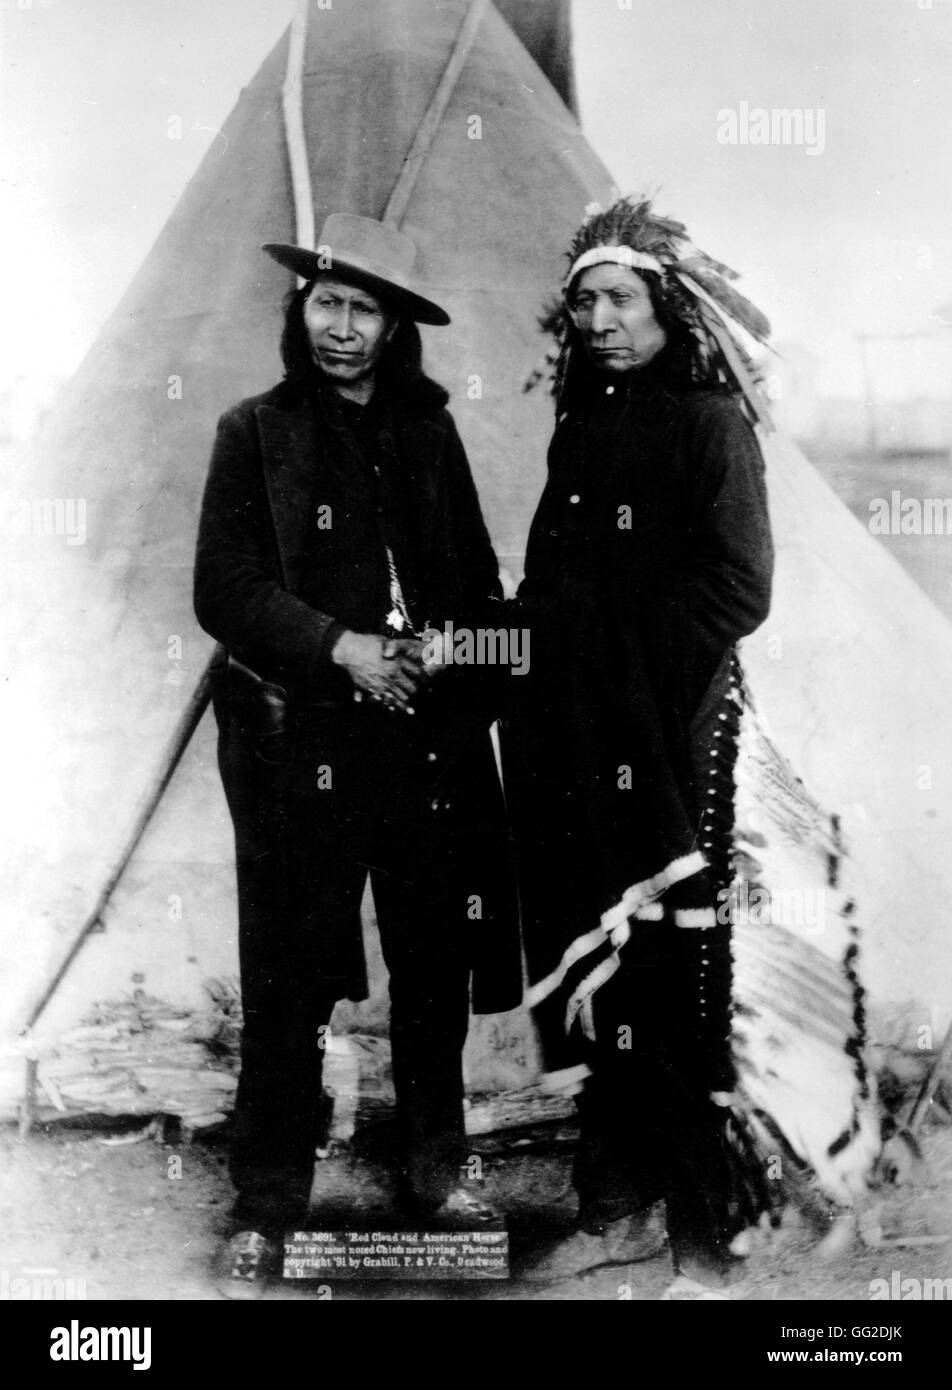 Zwei berühmte Indianerhäuptlinge Foto Grabill 1891 Vereinigten Staaten Washington. Library of Congress Stockfoto